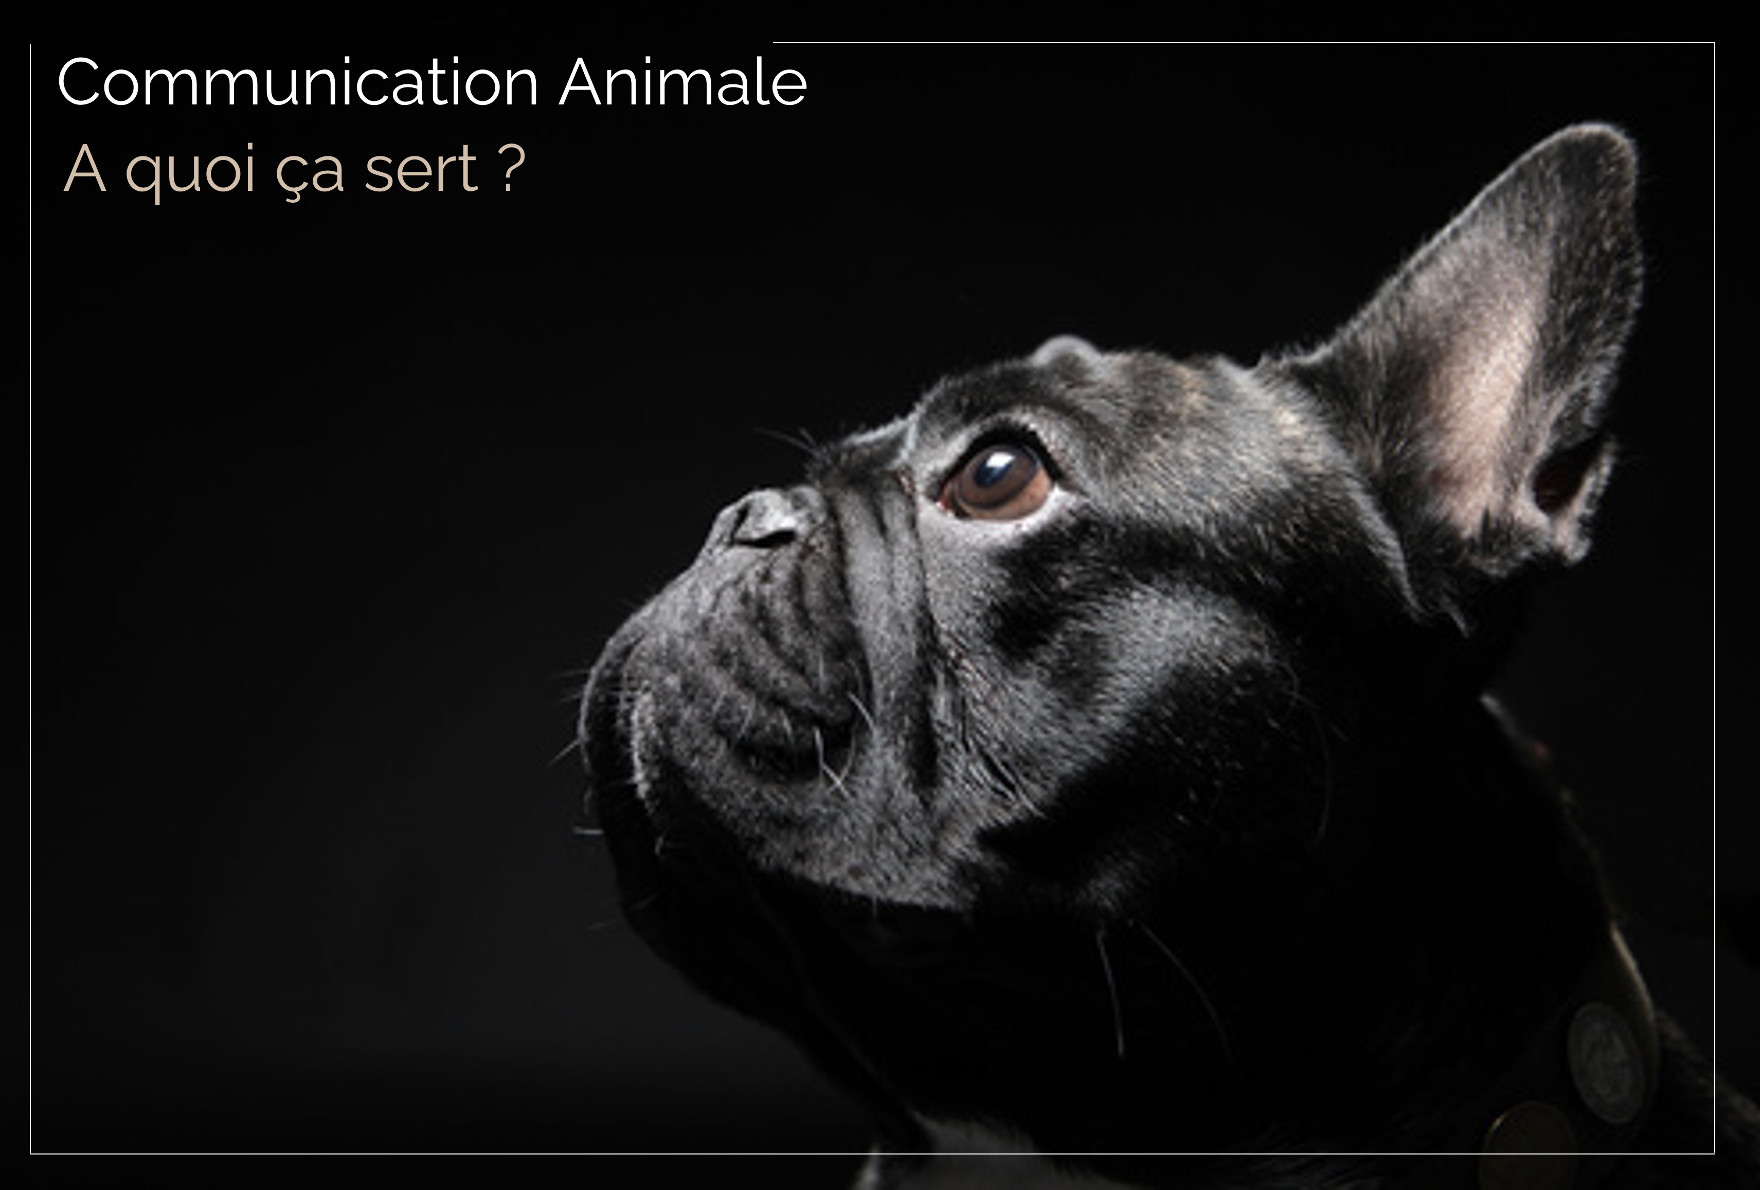 A quoi sert la Communication animale ?